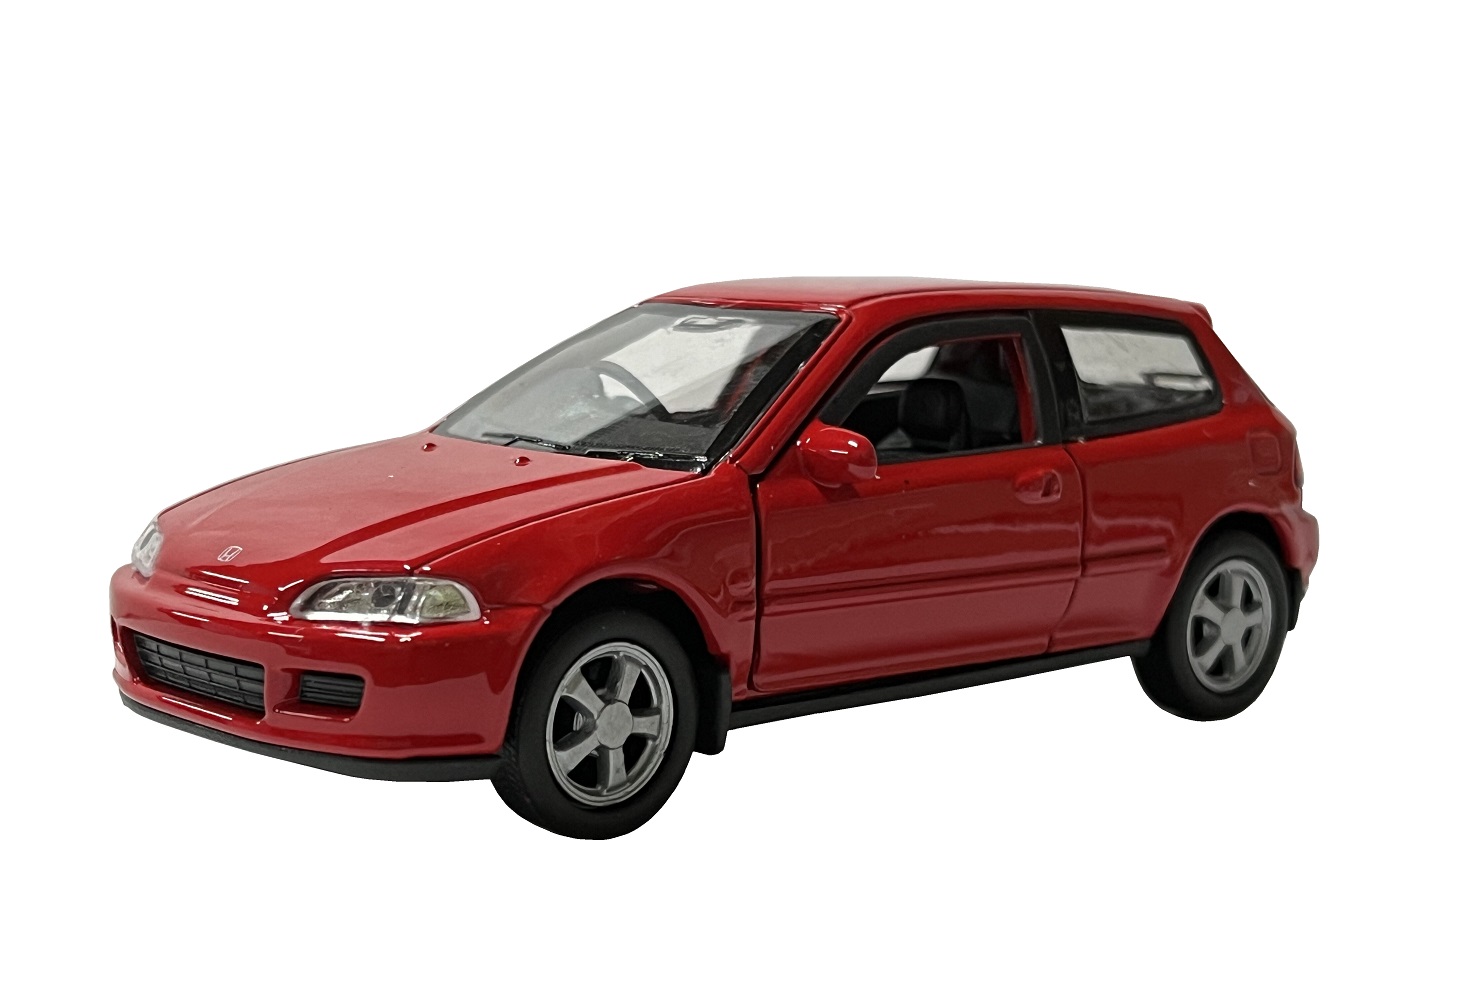 Модель машины Welly 1:38 Honda Civic EG6 красный 43813 motorhelix mh 1 64 honda civic type r fl5 car model